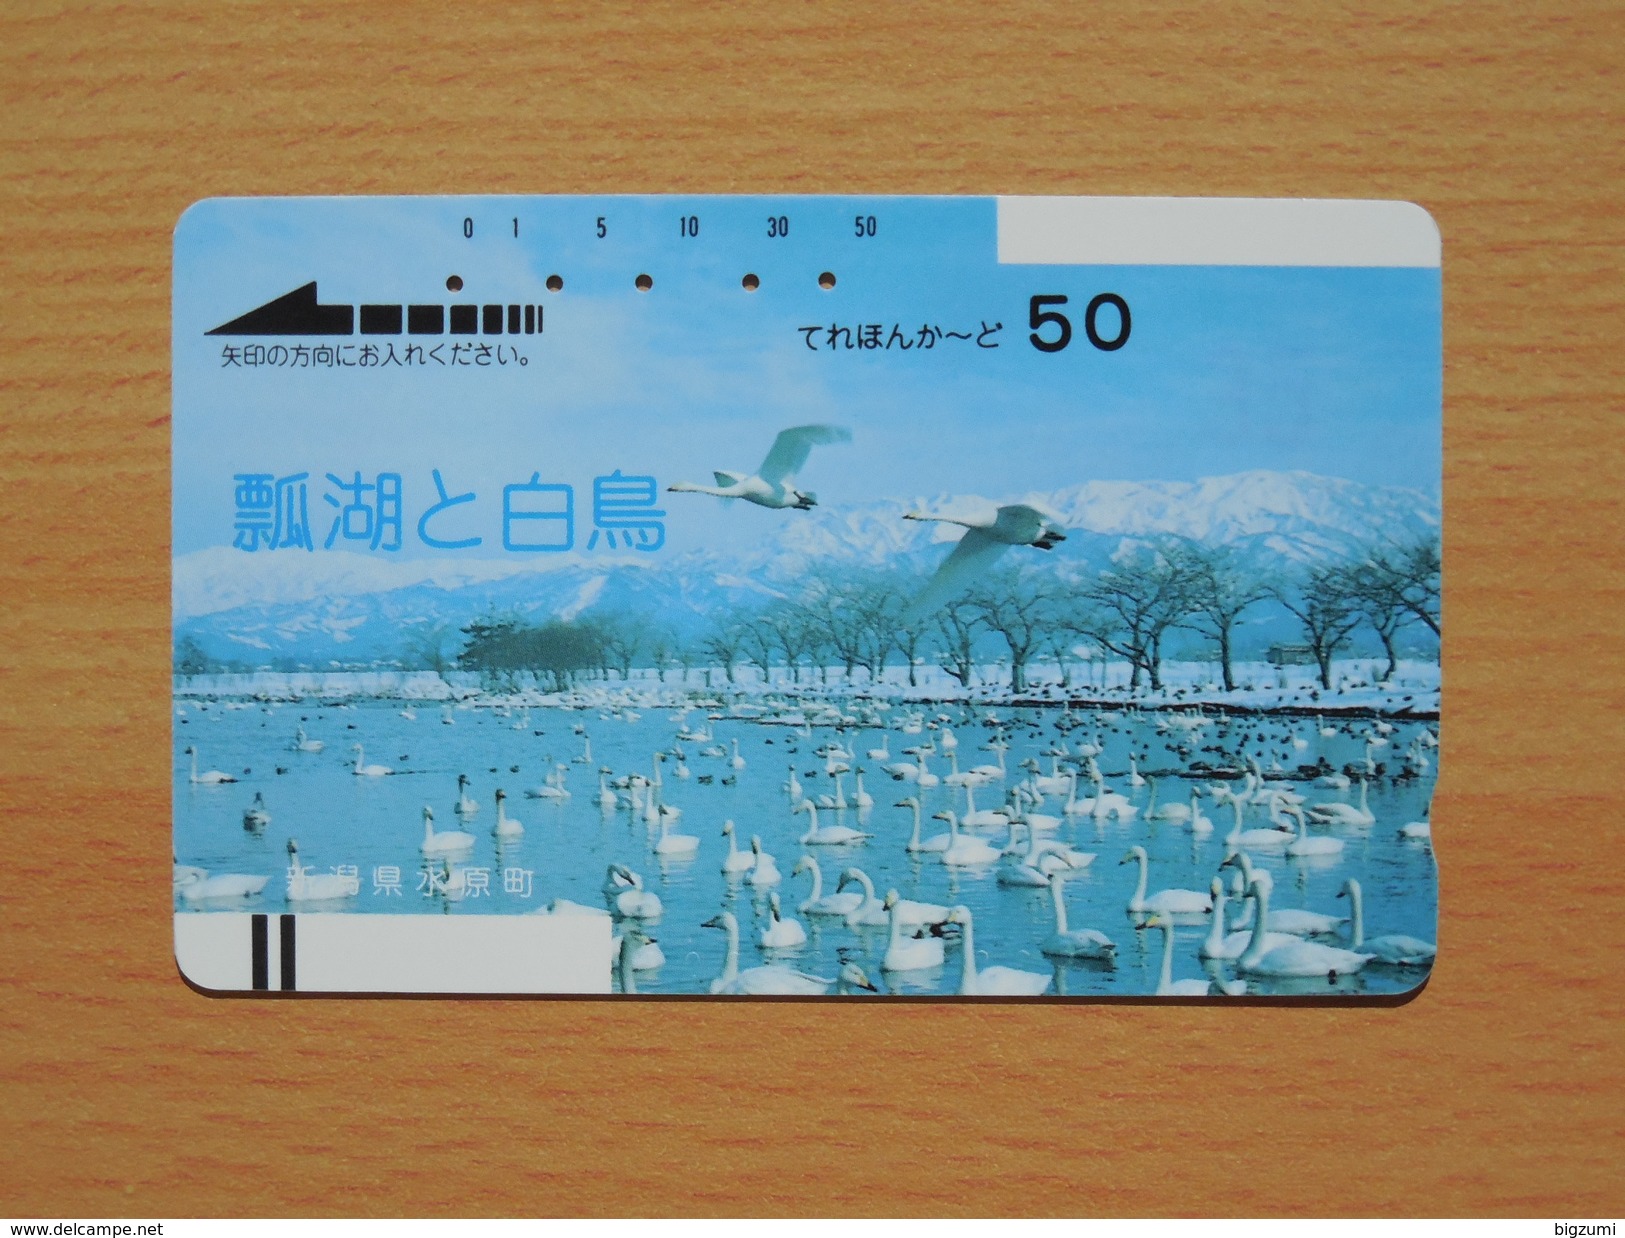 Japon Japan Free Front Bar, Balken Phonecard - 110-2508 / Swan, Schwan, Cygne - Zangvogels